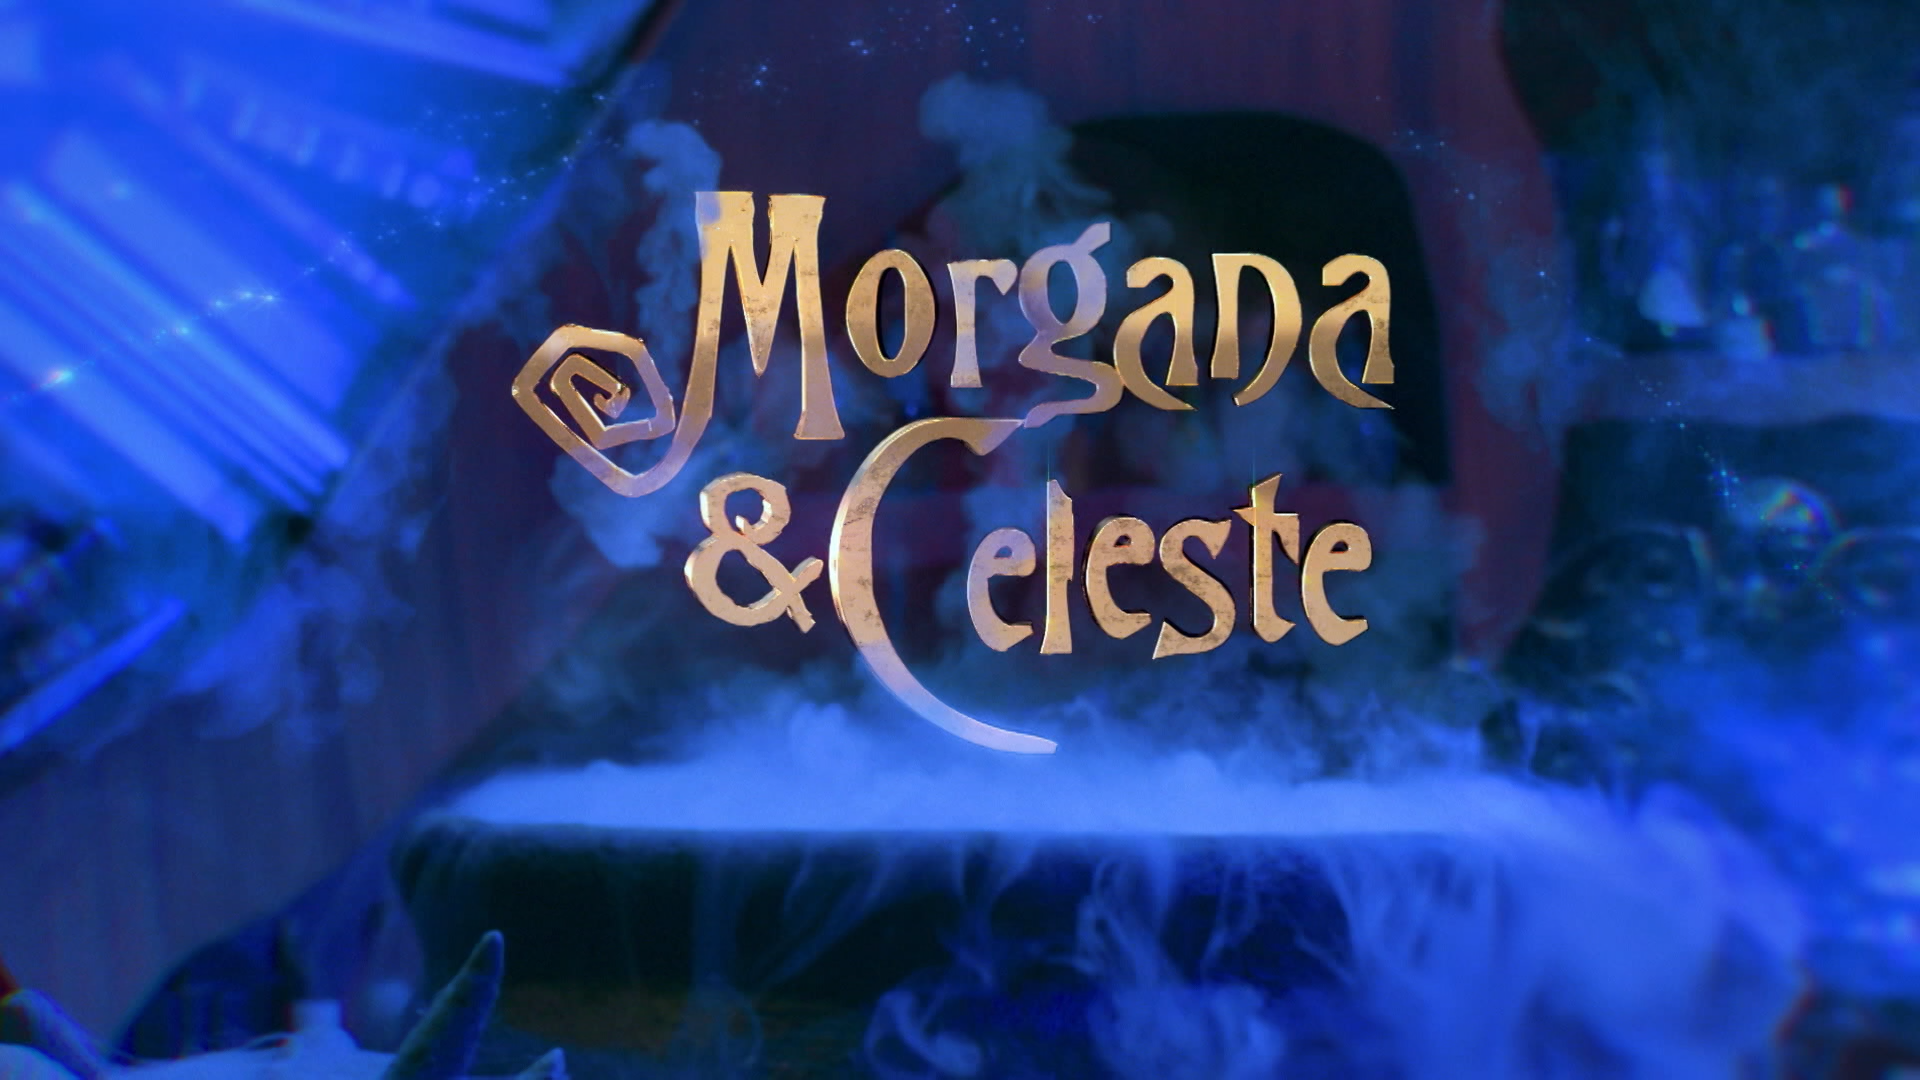 Morgana & Celeste